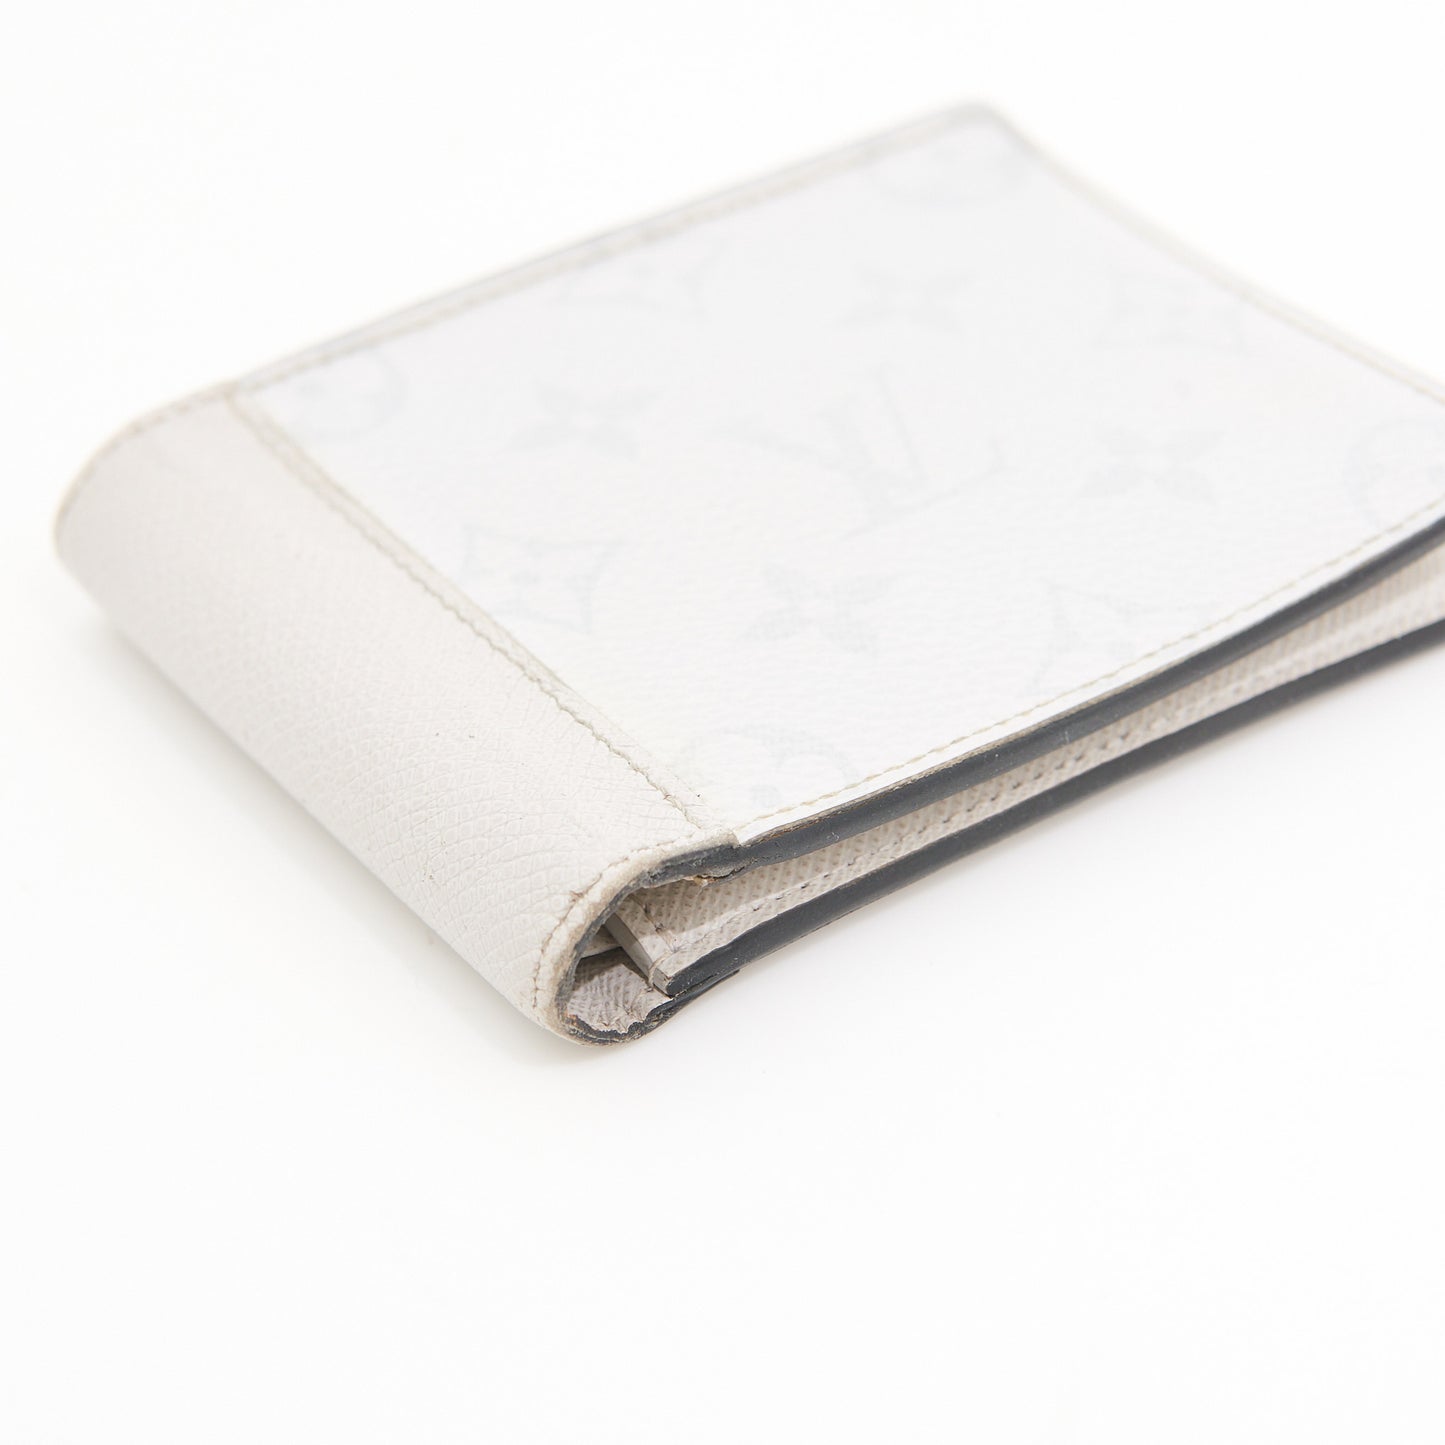 Louis Vuitton Canvas Flap Wallet in White